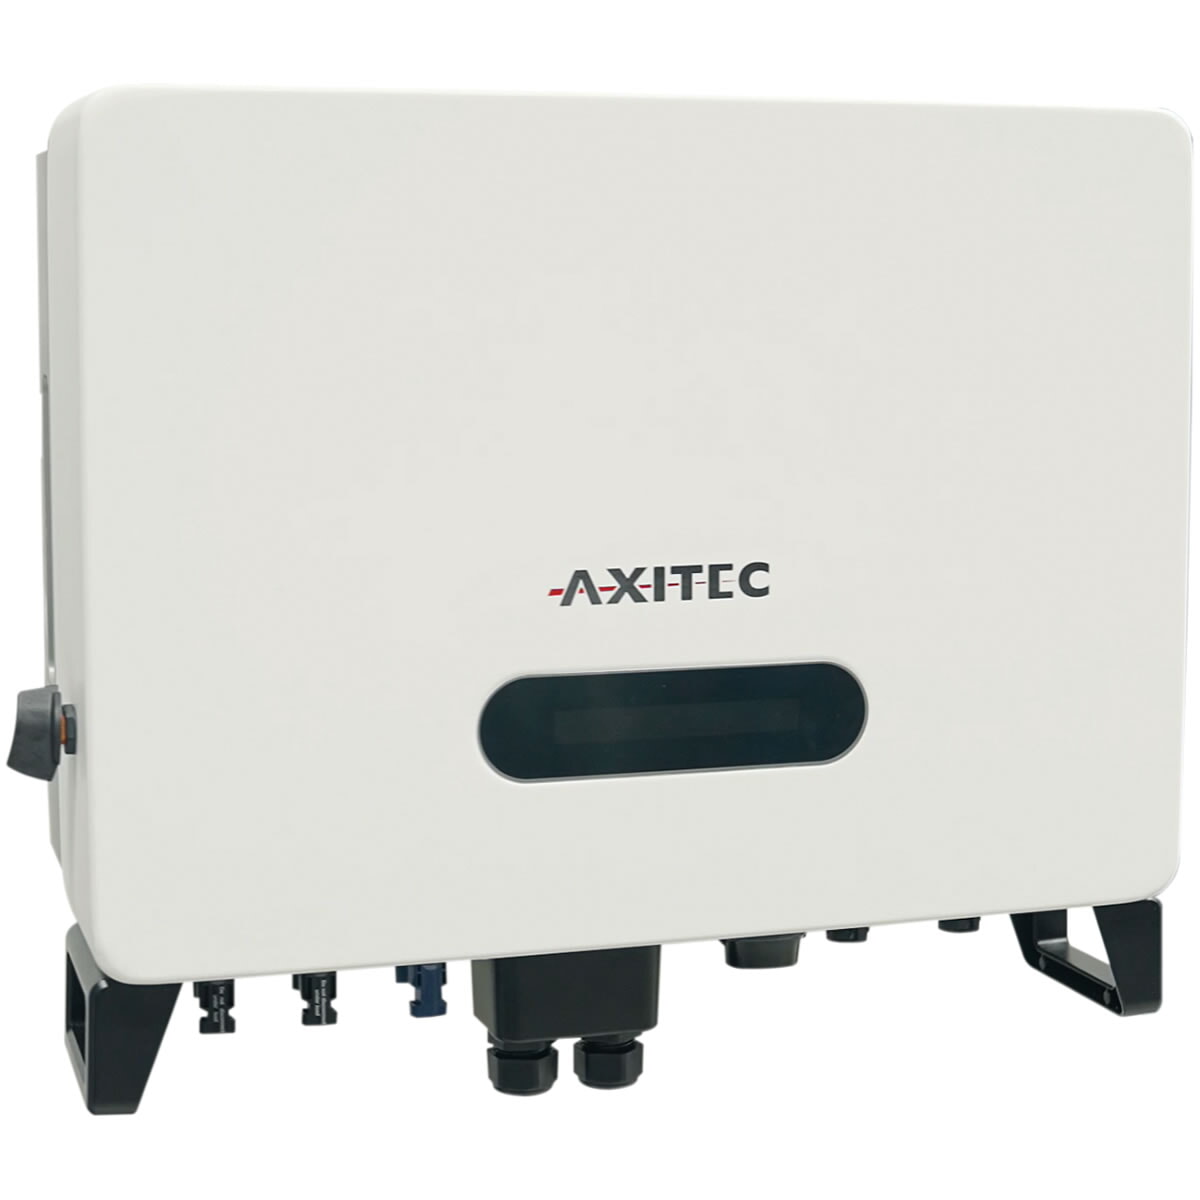 AXITEC Axihycon 10H Hybrid-Wechselrichter, 3-Phasig